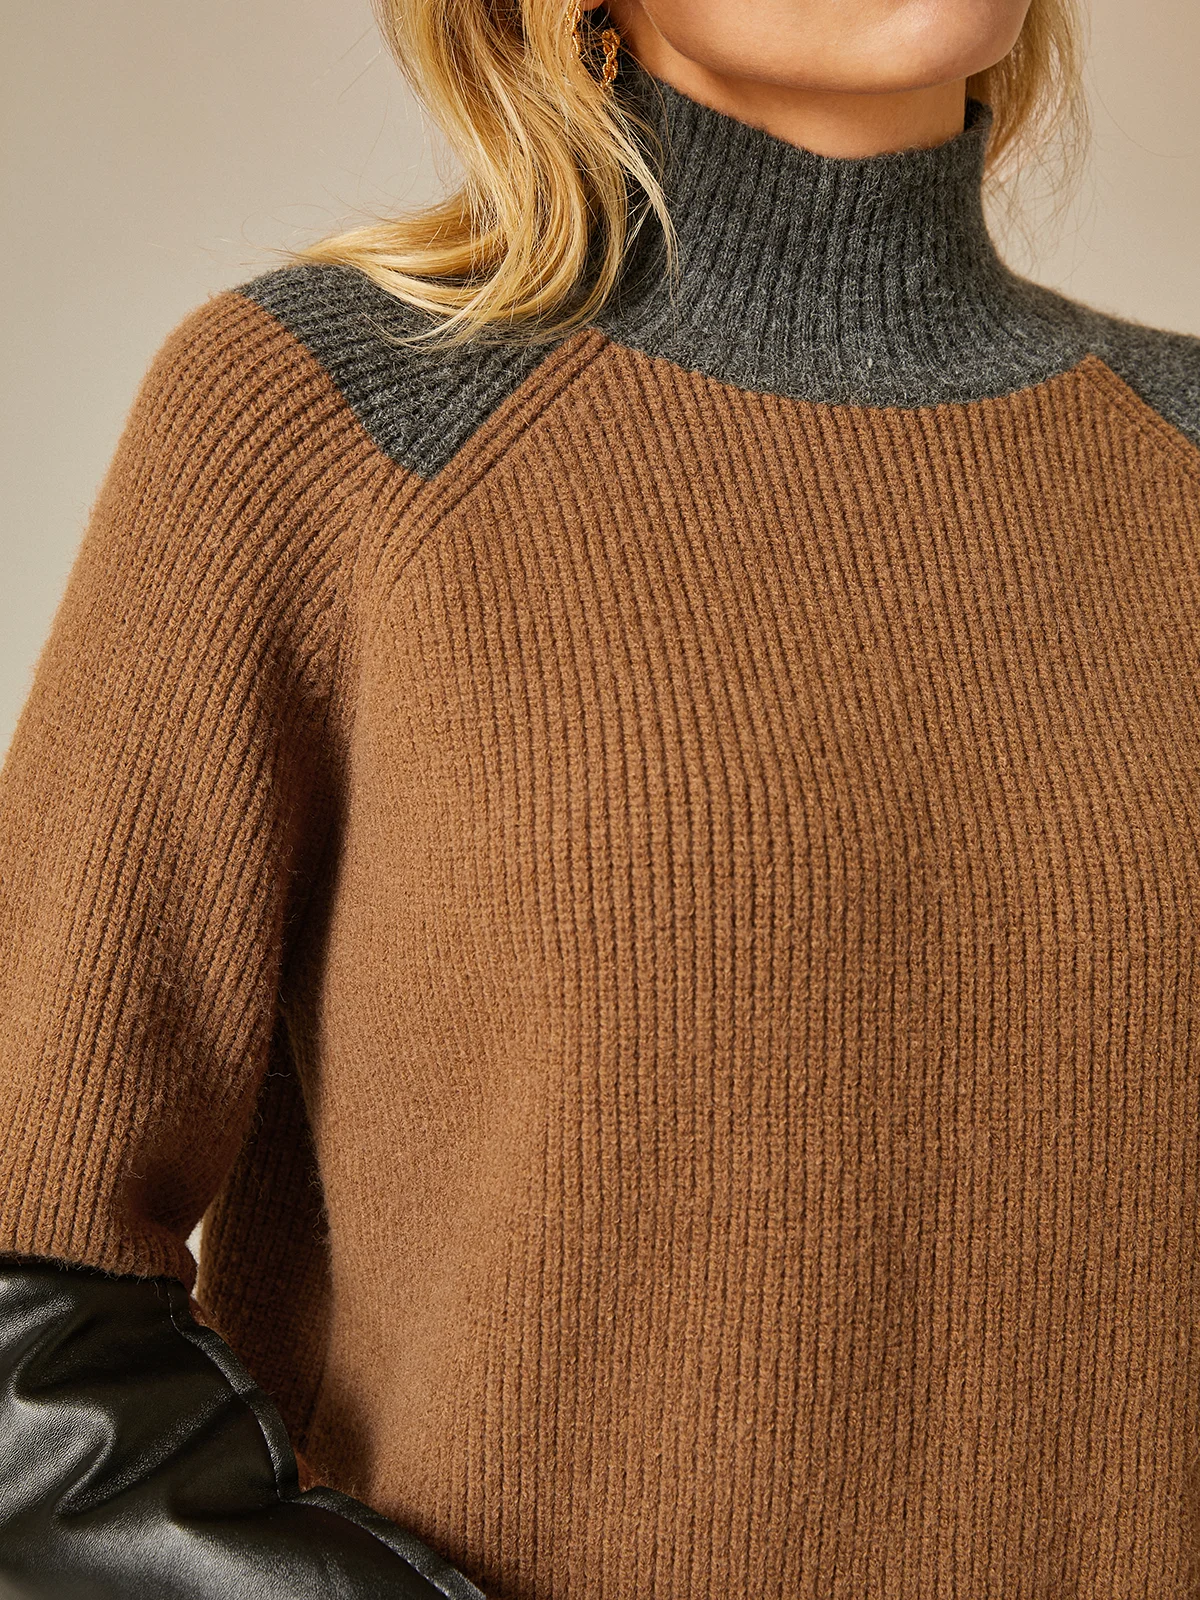 Turtleneck Urban Loose Long Sleeve Sweater